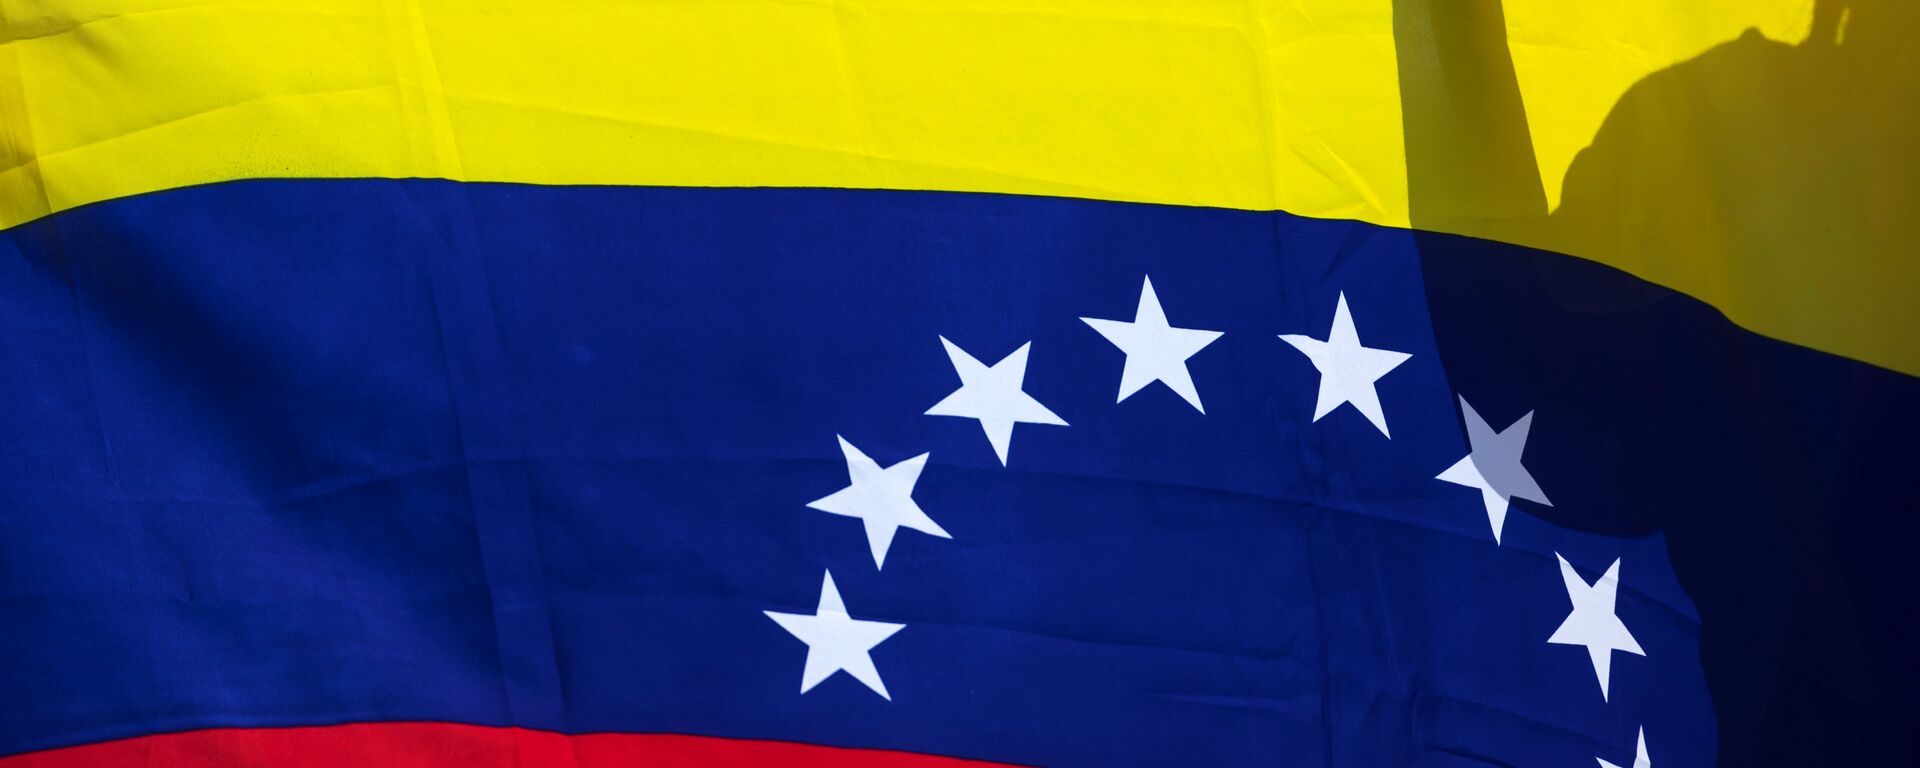 Bandera de Venezuela - Sputnik Mundo, 1920, 05.09.2021